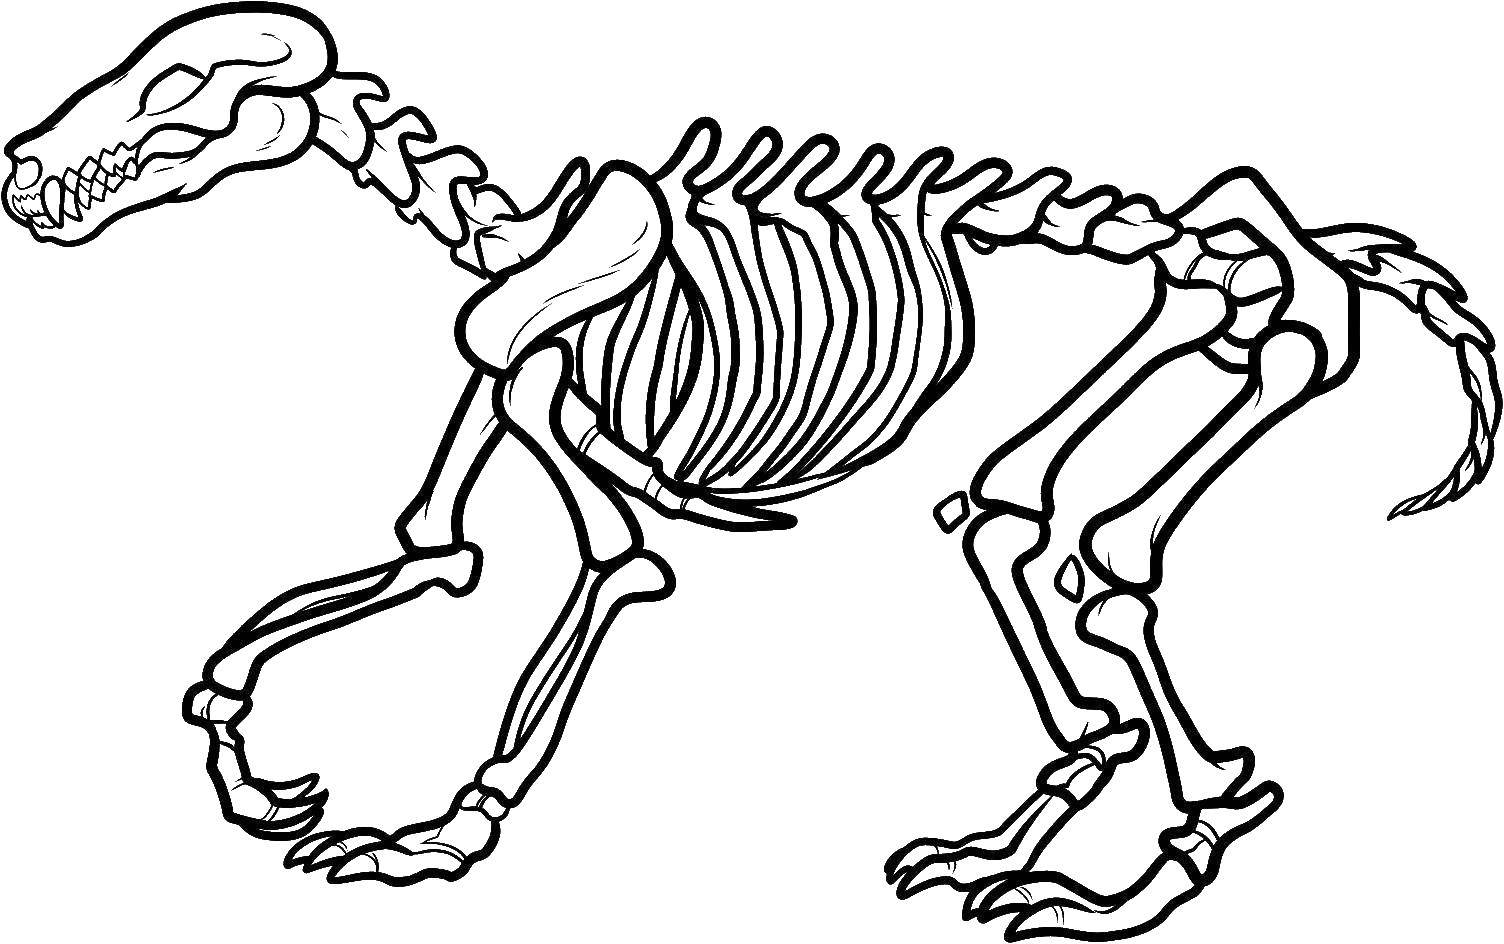   Динозавр скелет